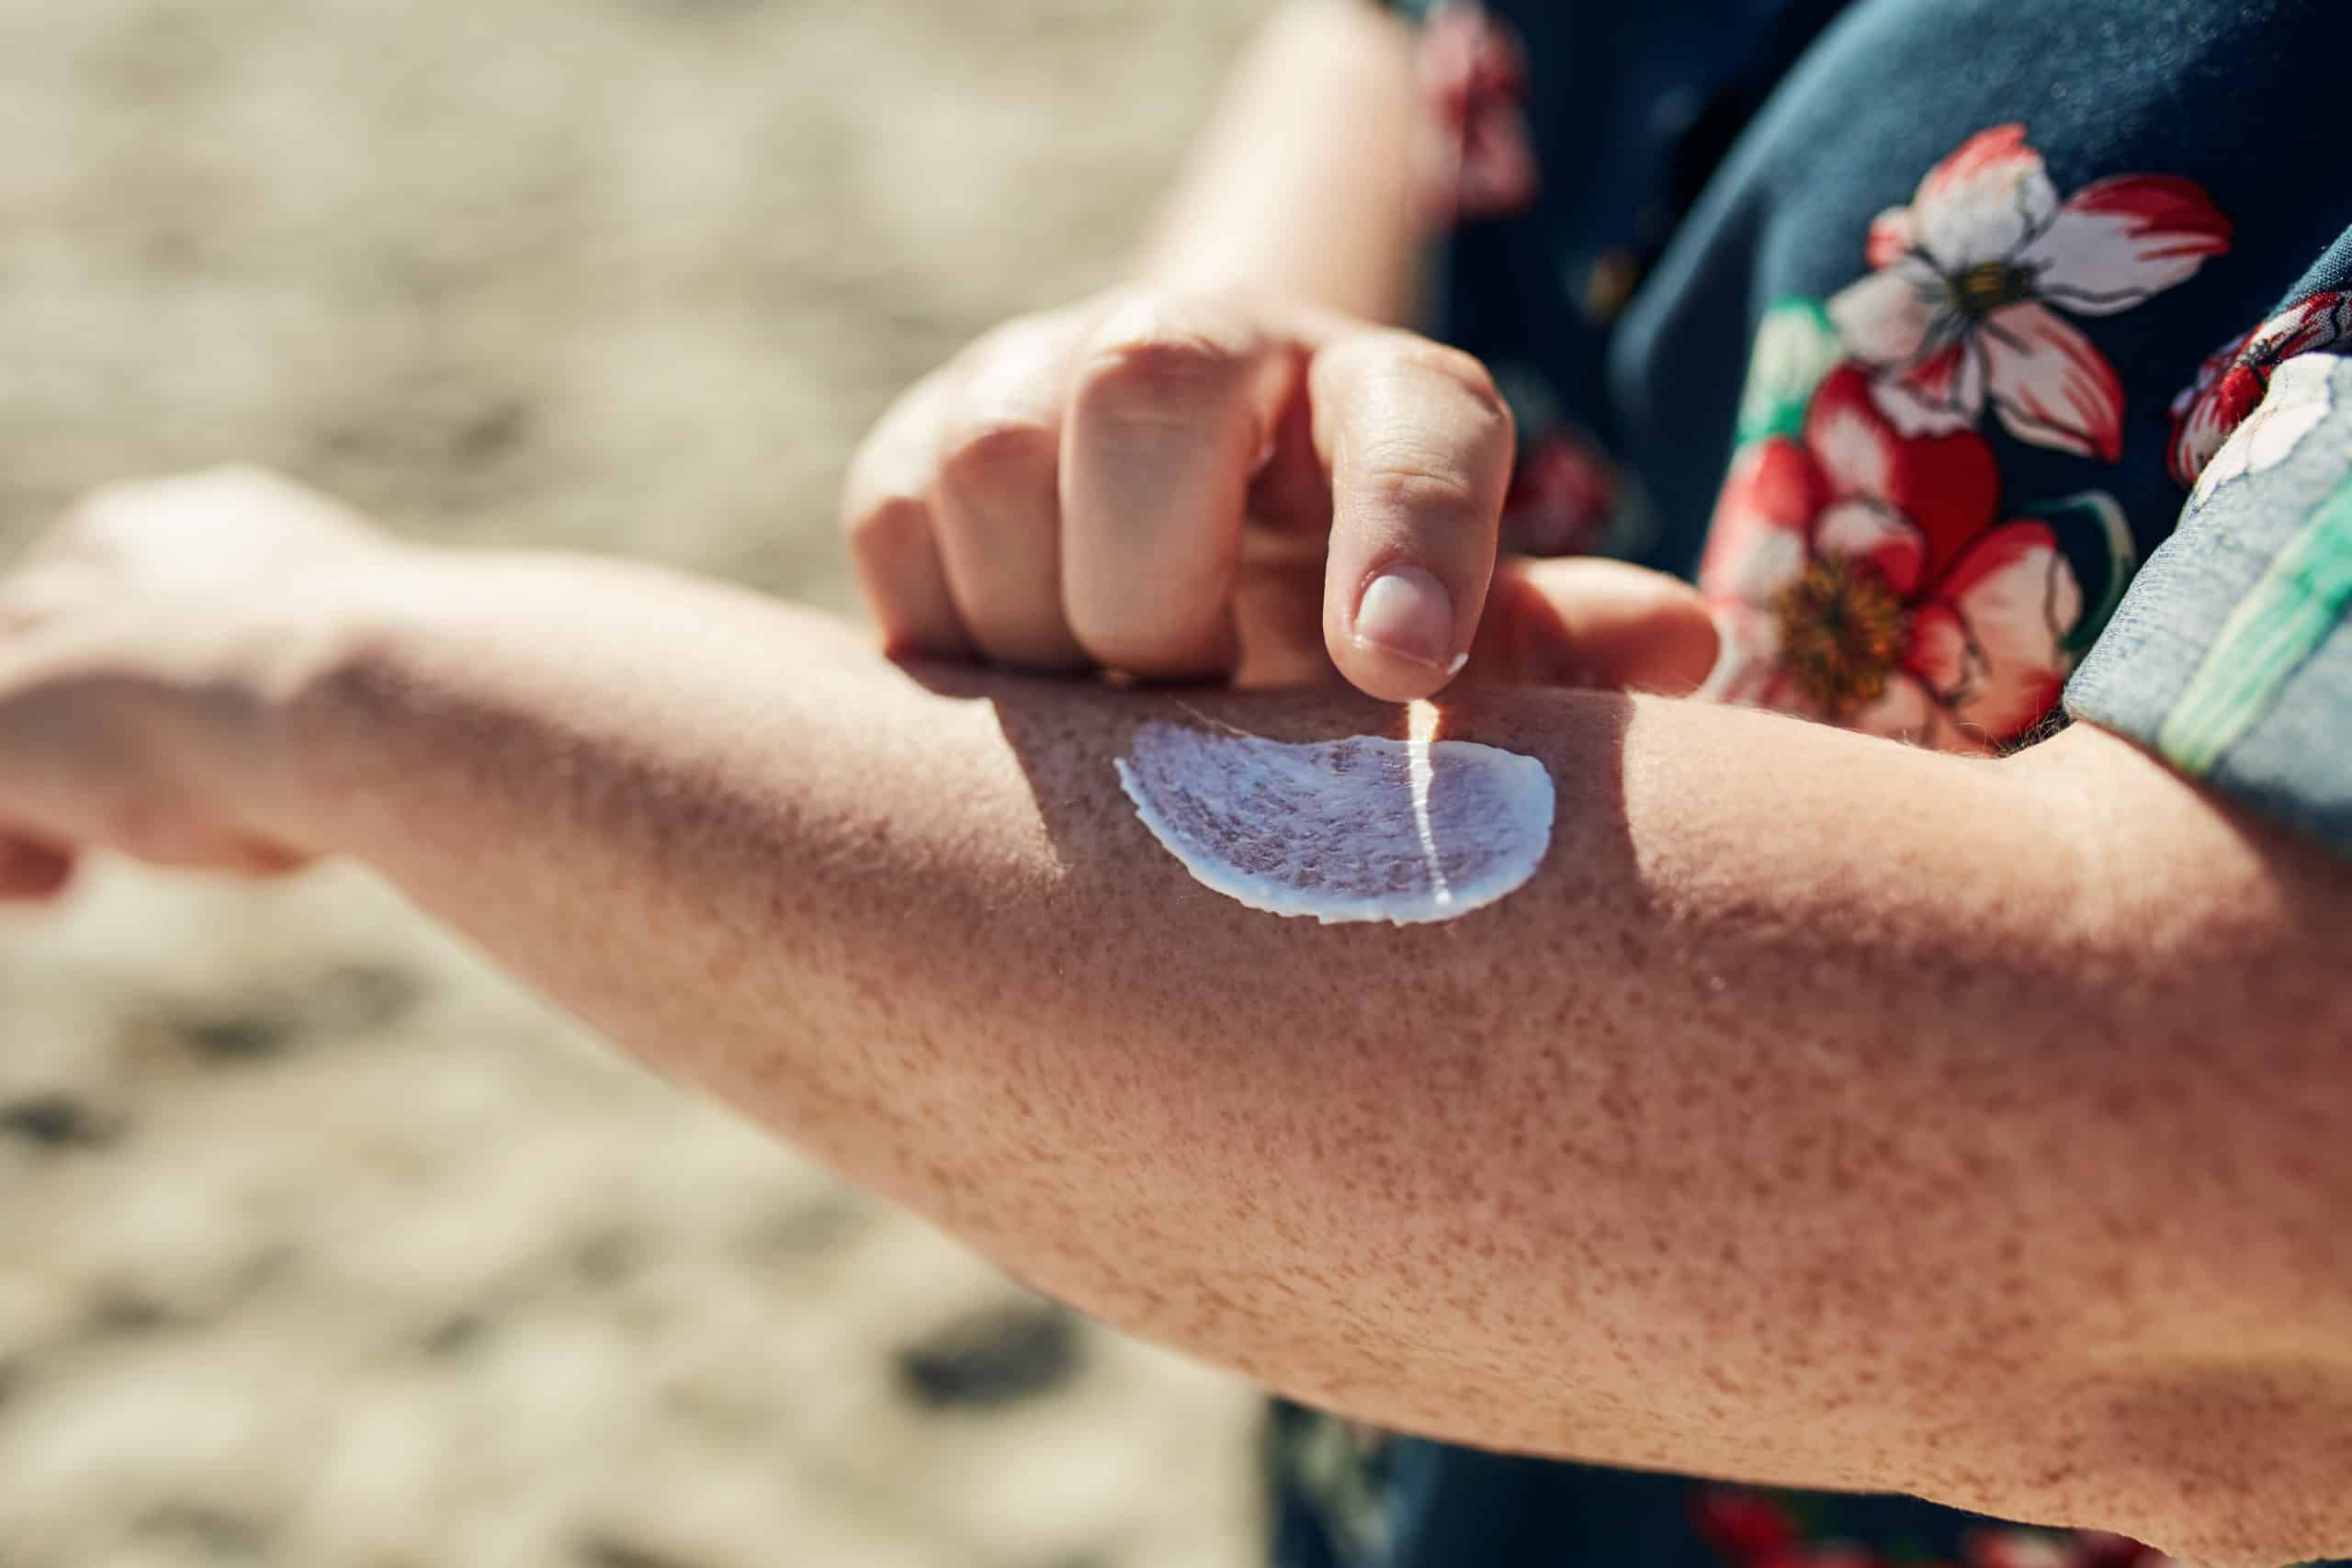 A person applies sunscreen to their skin